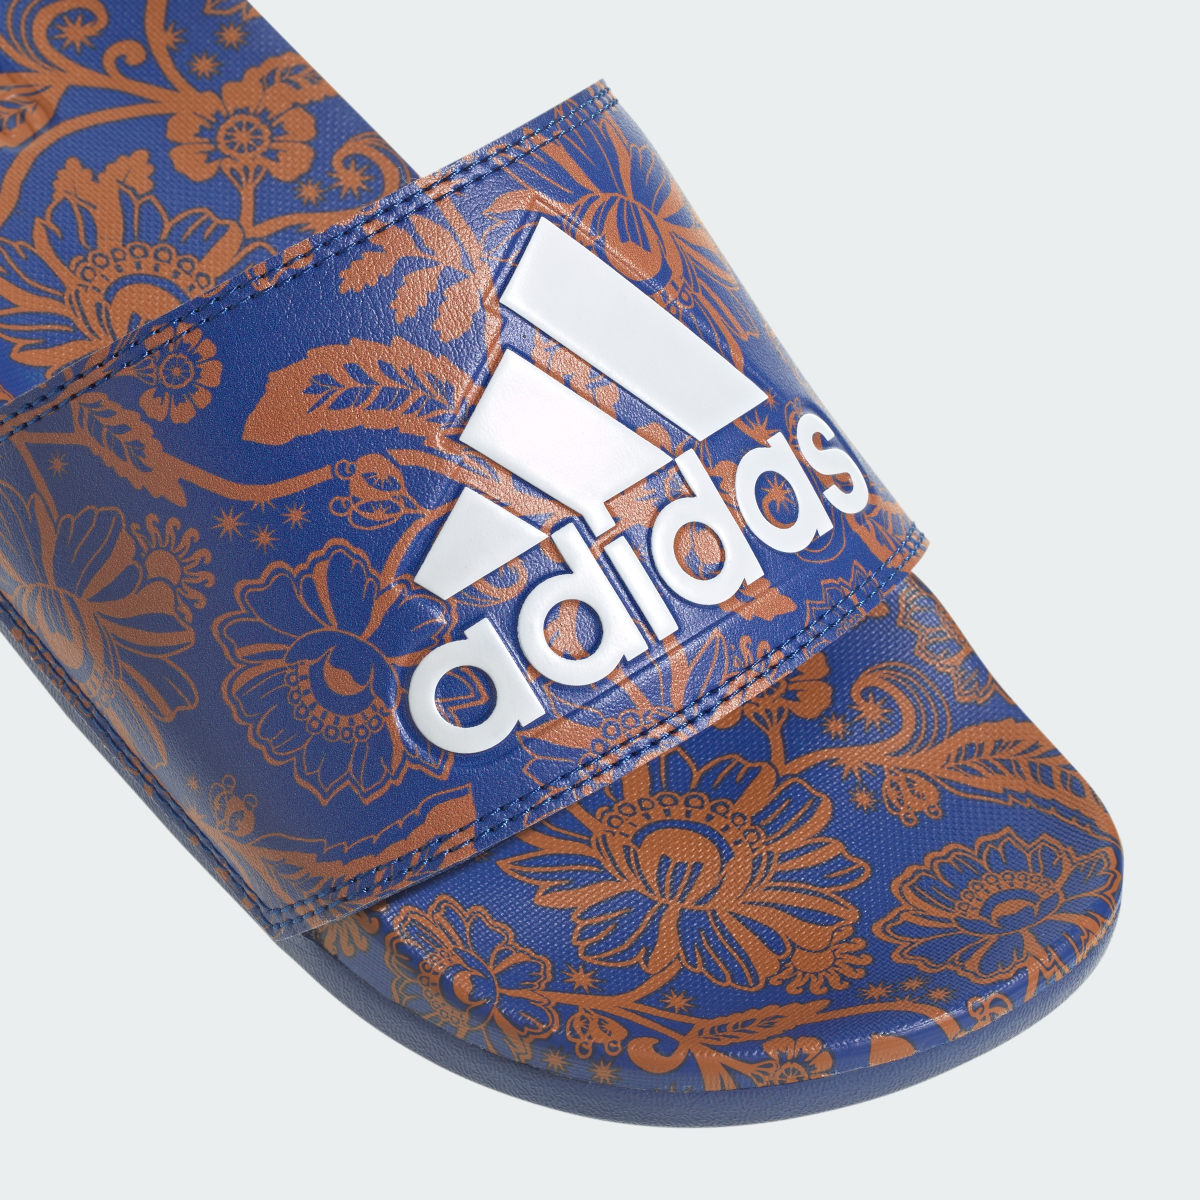 Adidas Adilette Comfort Sandals. 8